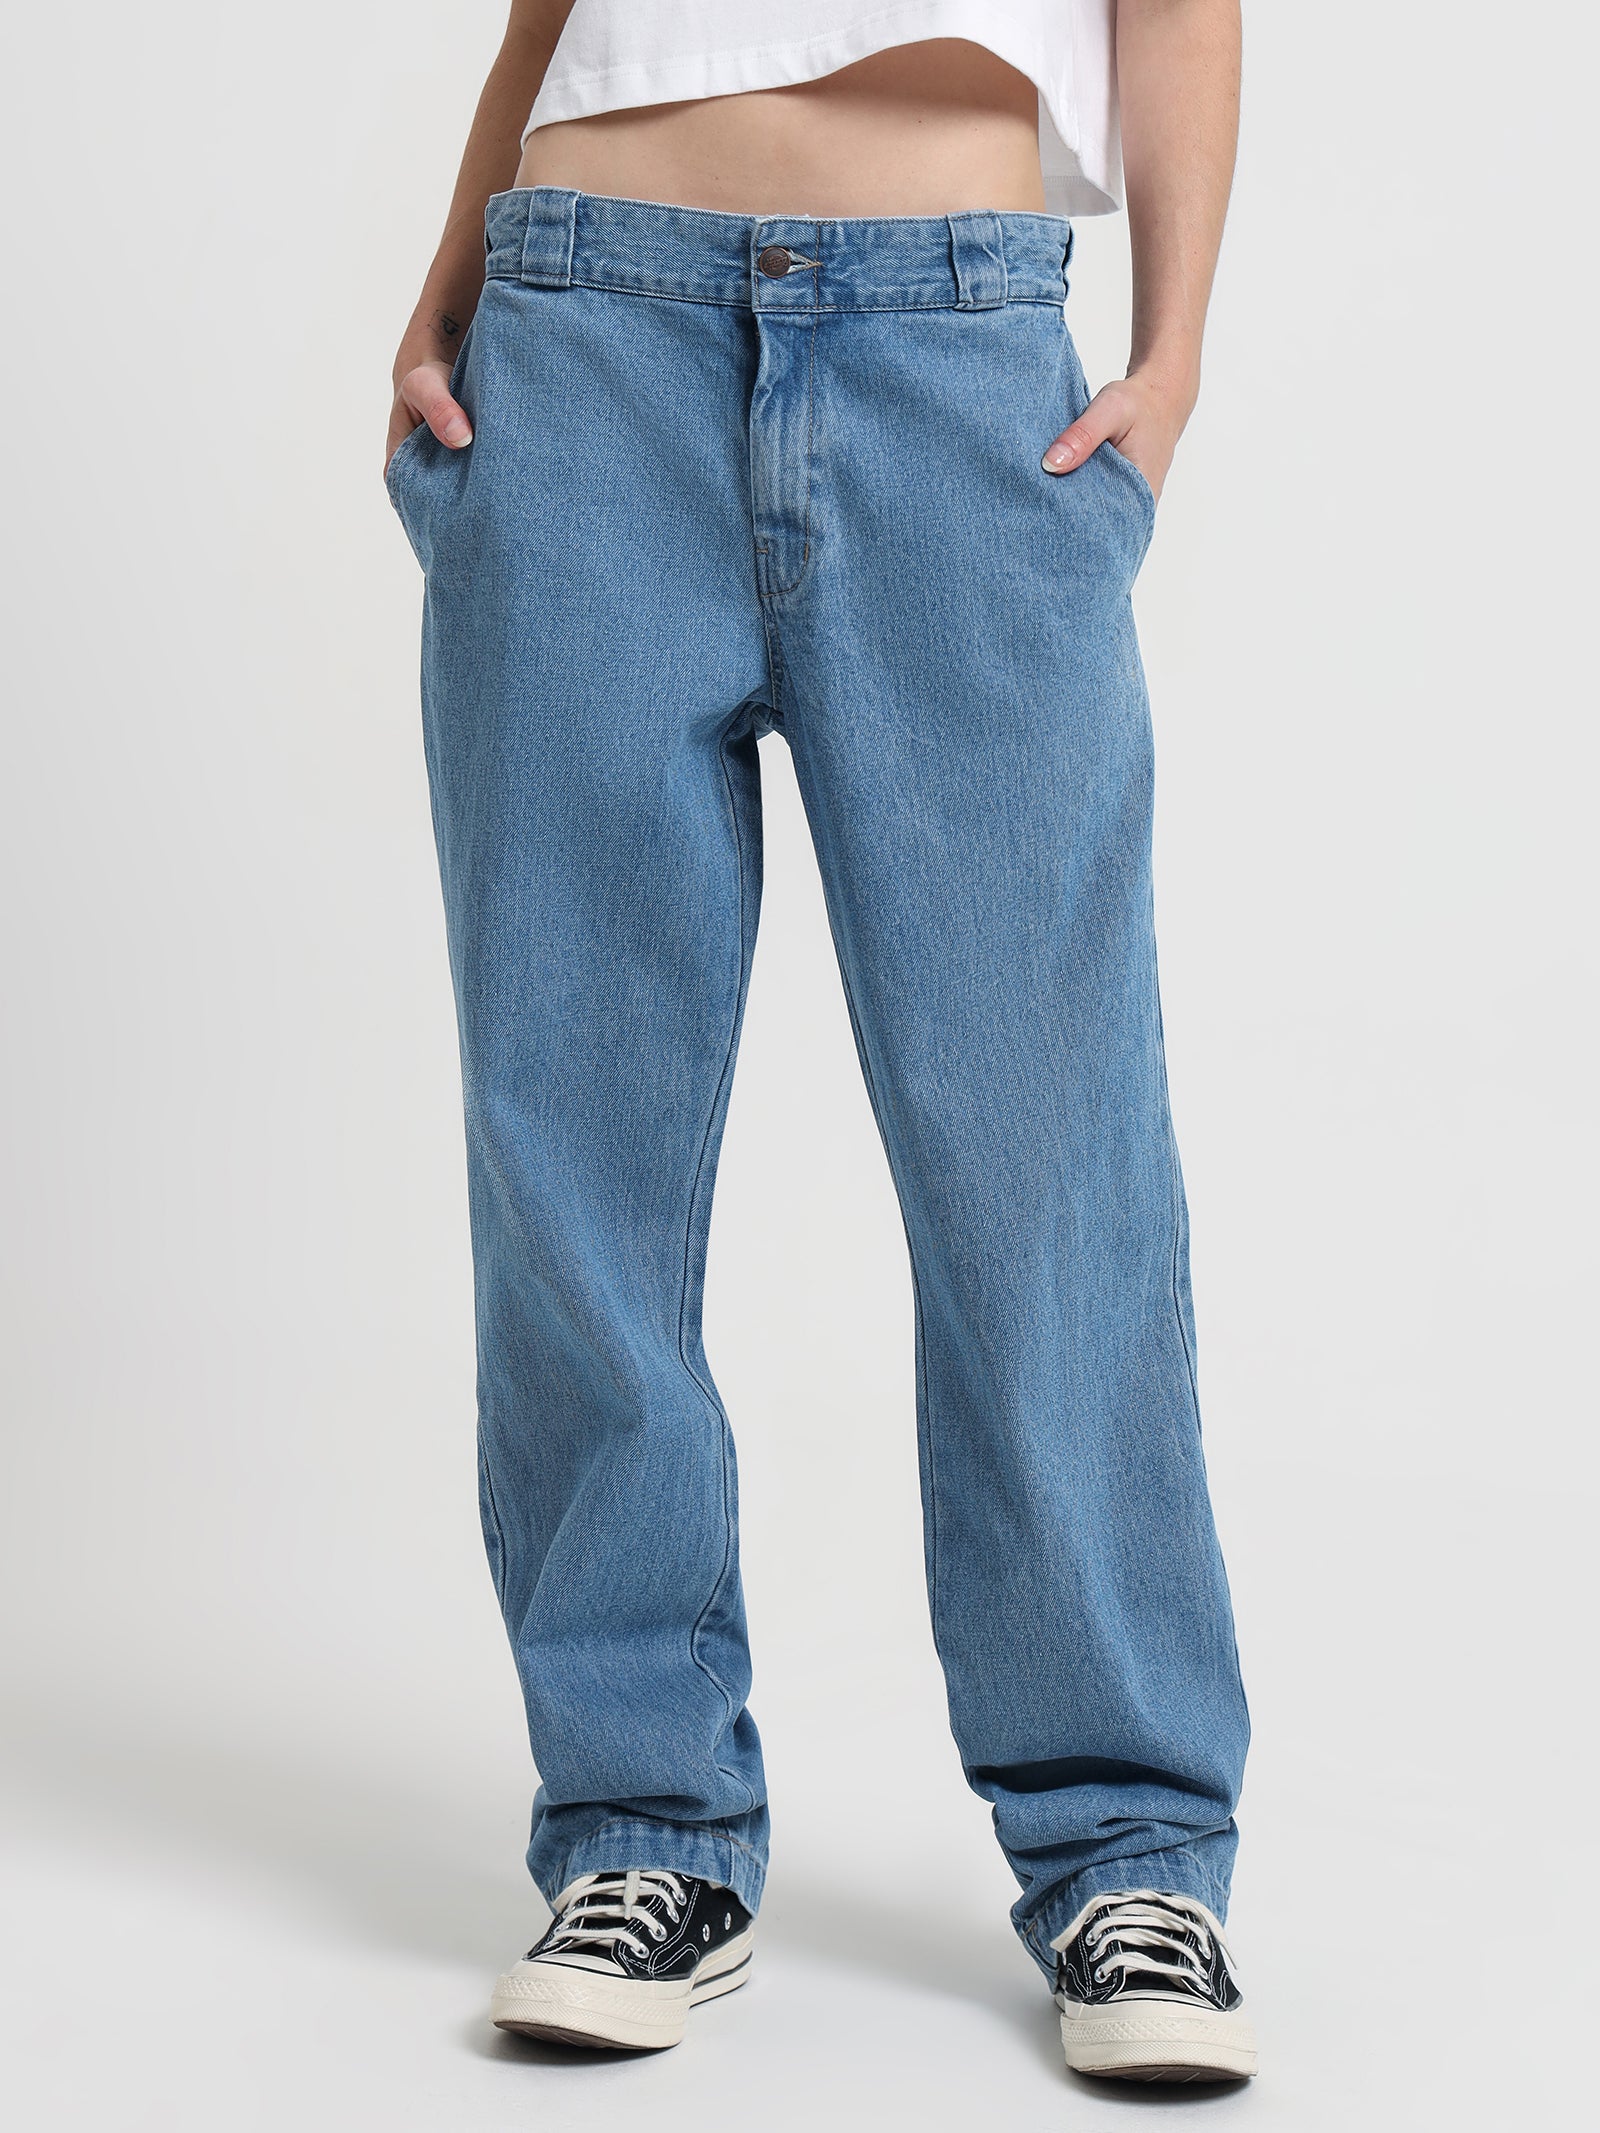 875 Denim Jeans in Light Indigo - Glue Store